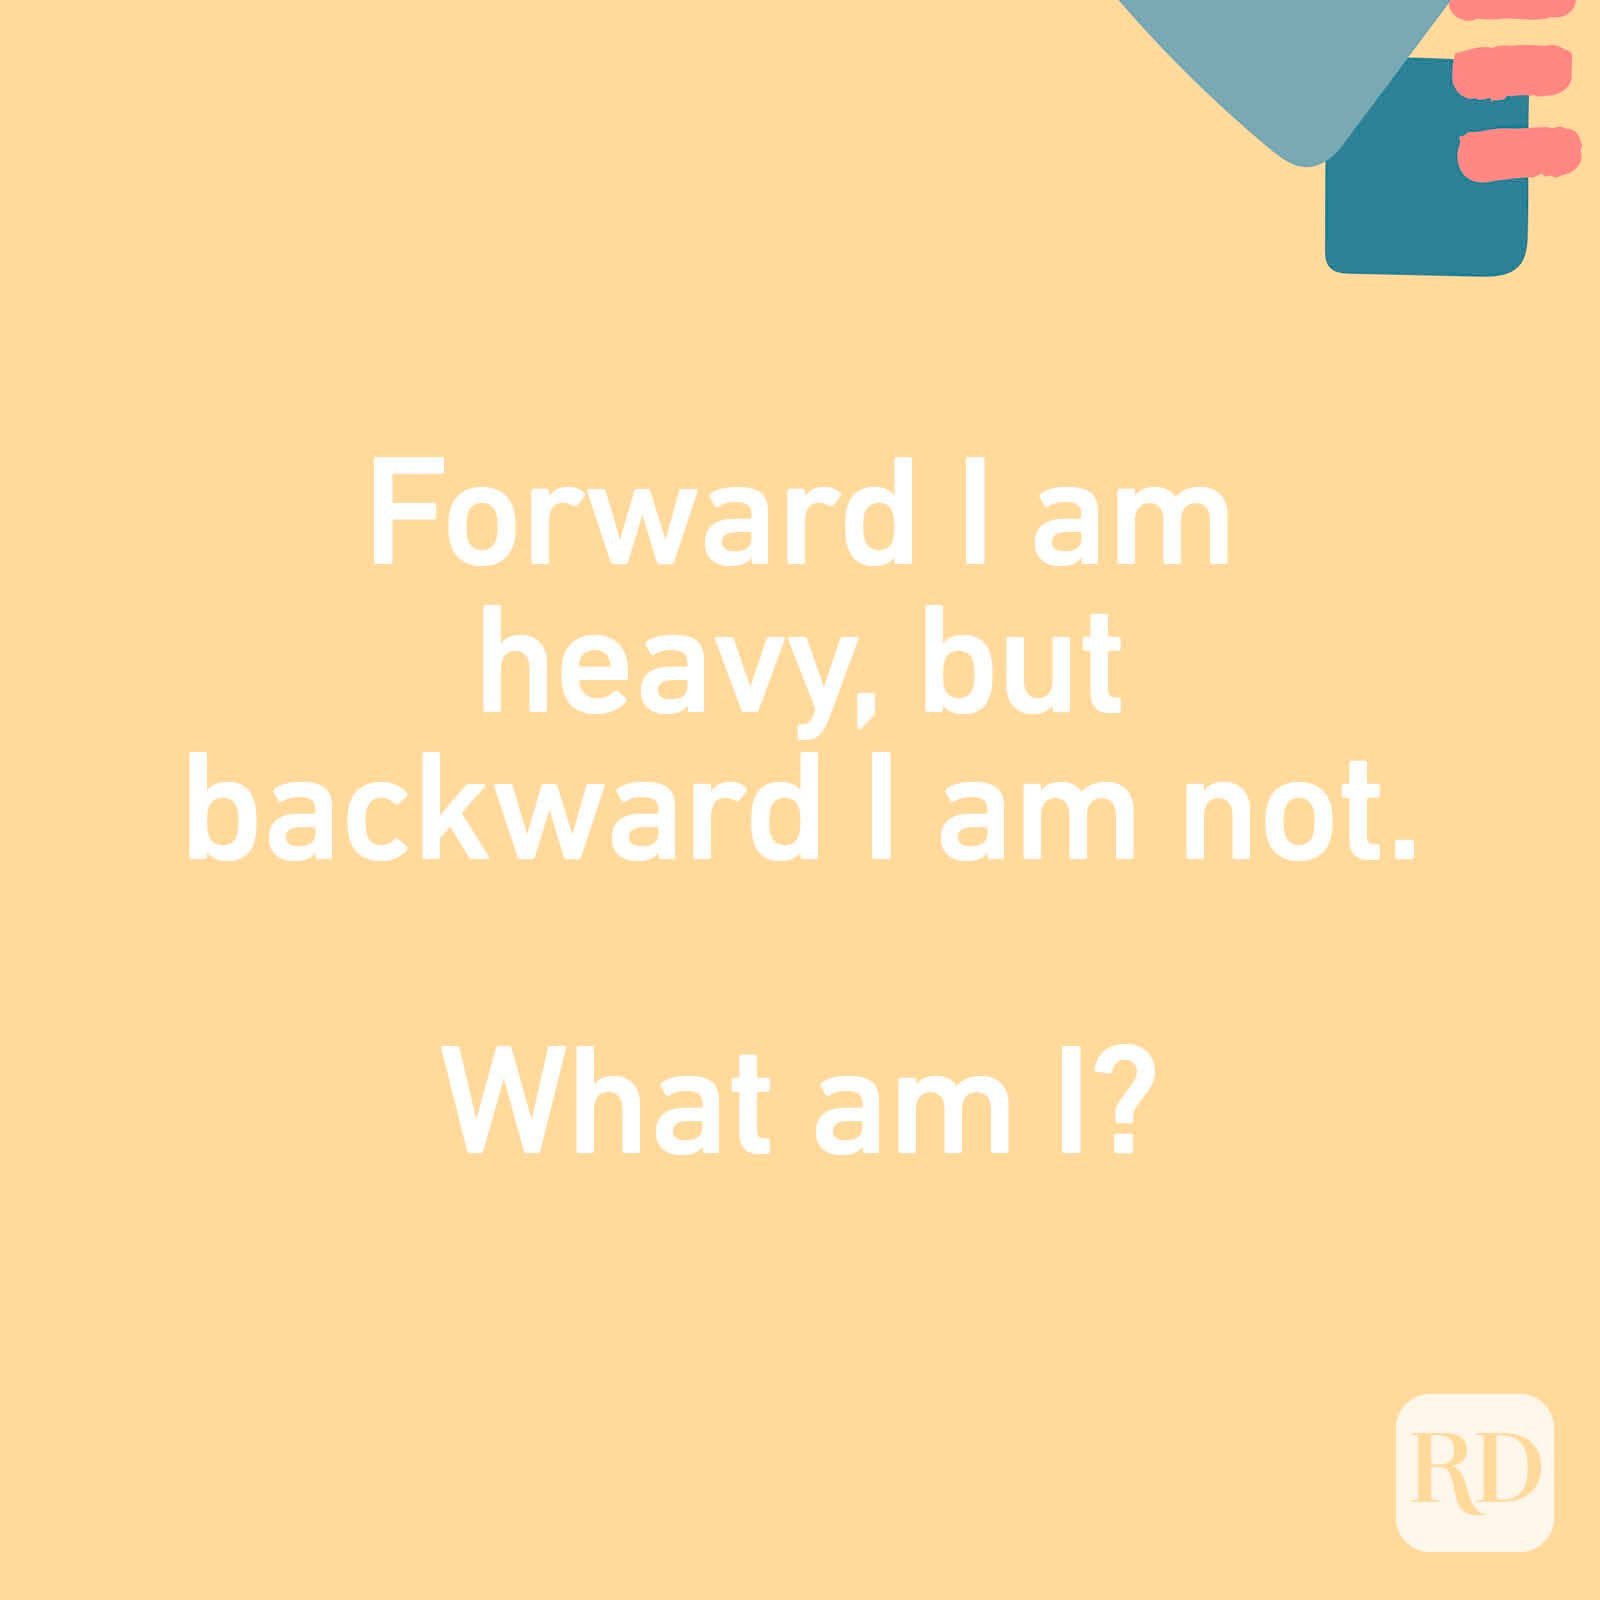 Forward I am heavy, but backward I am not. What am I?